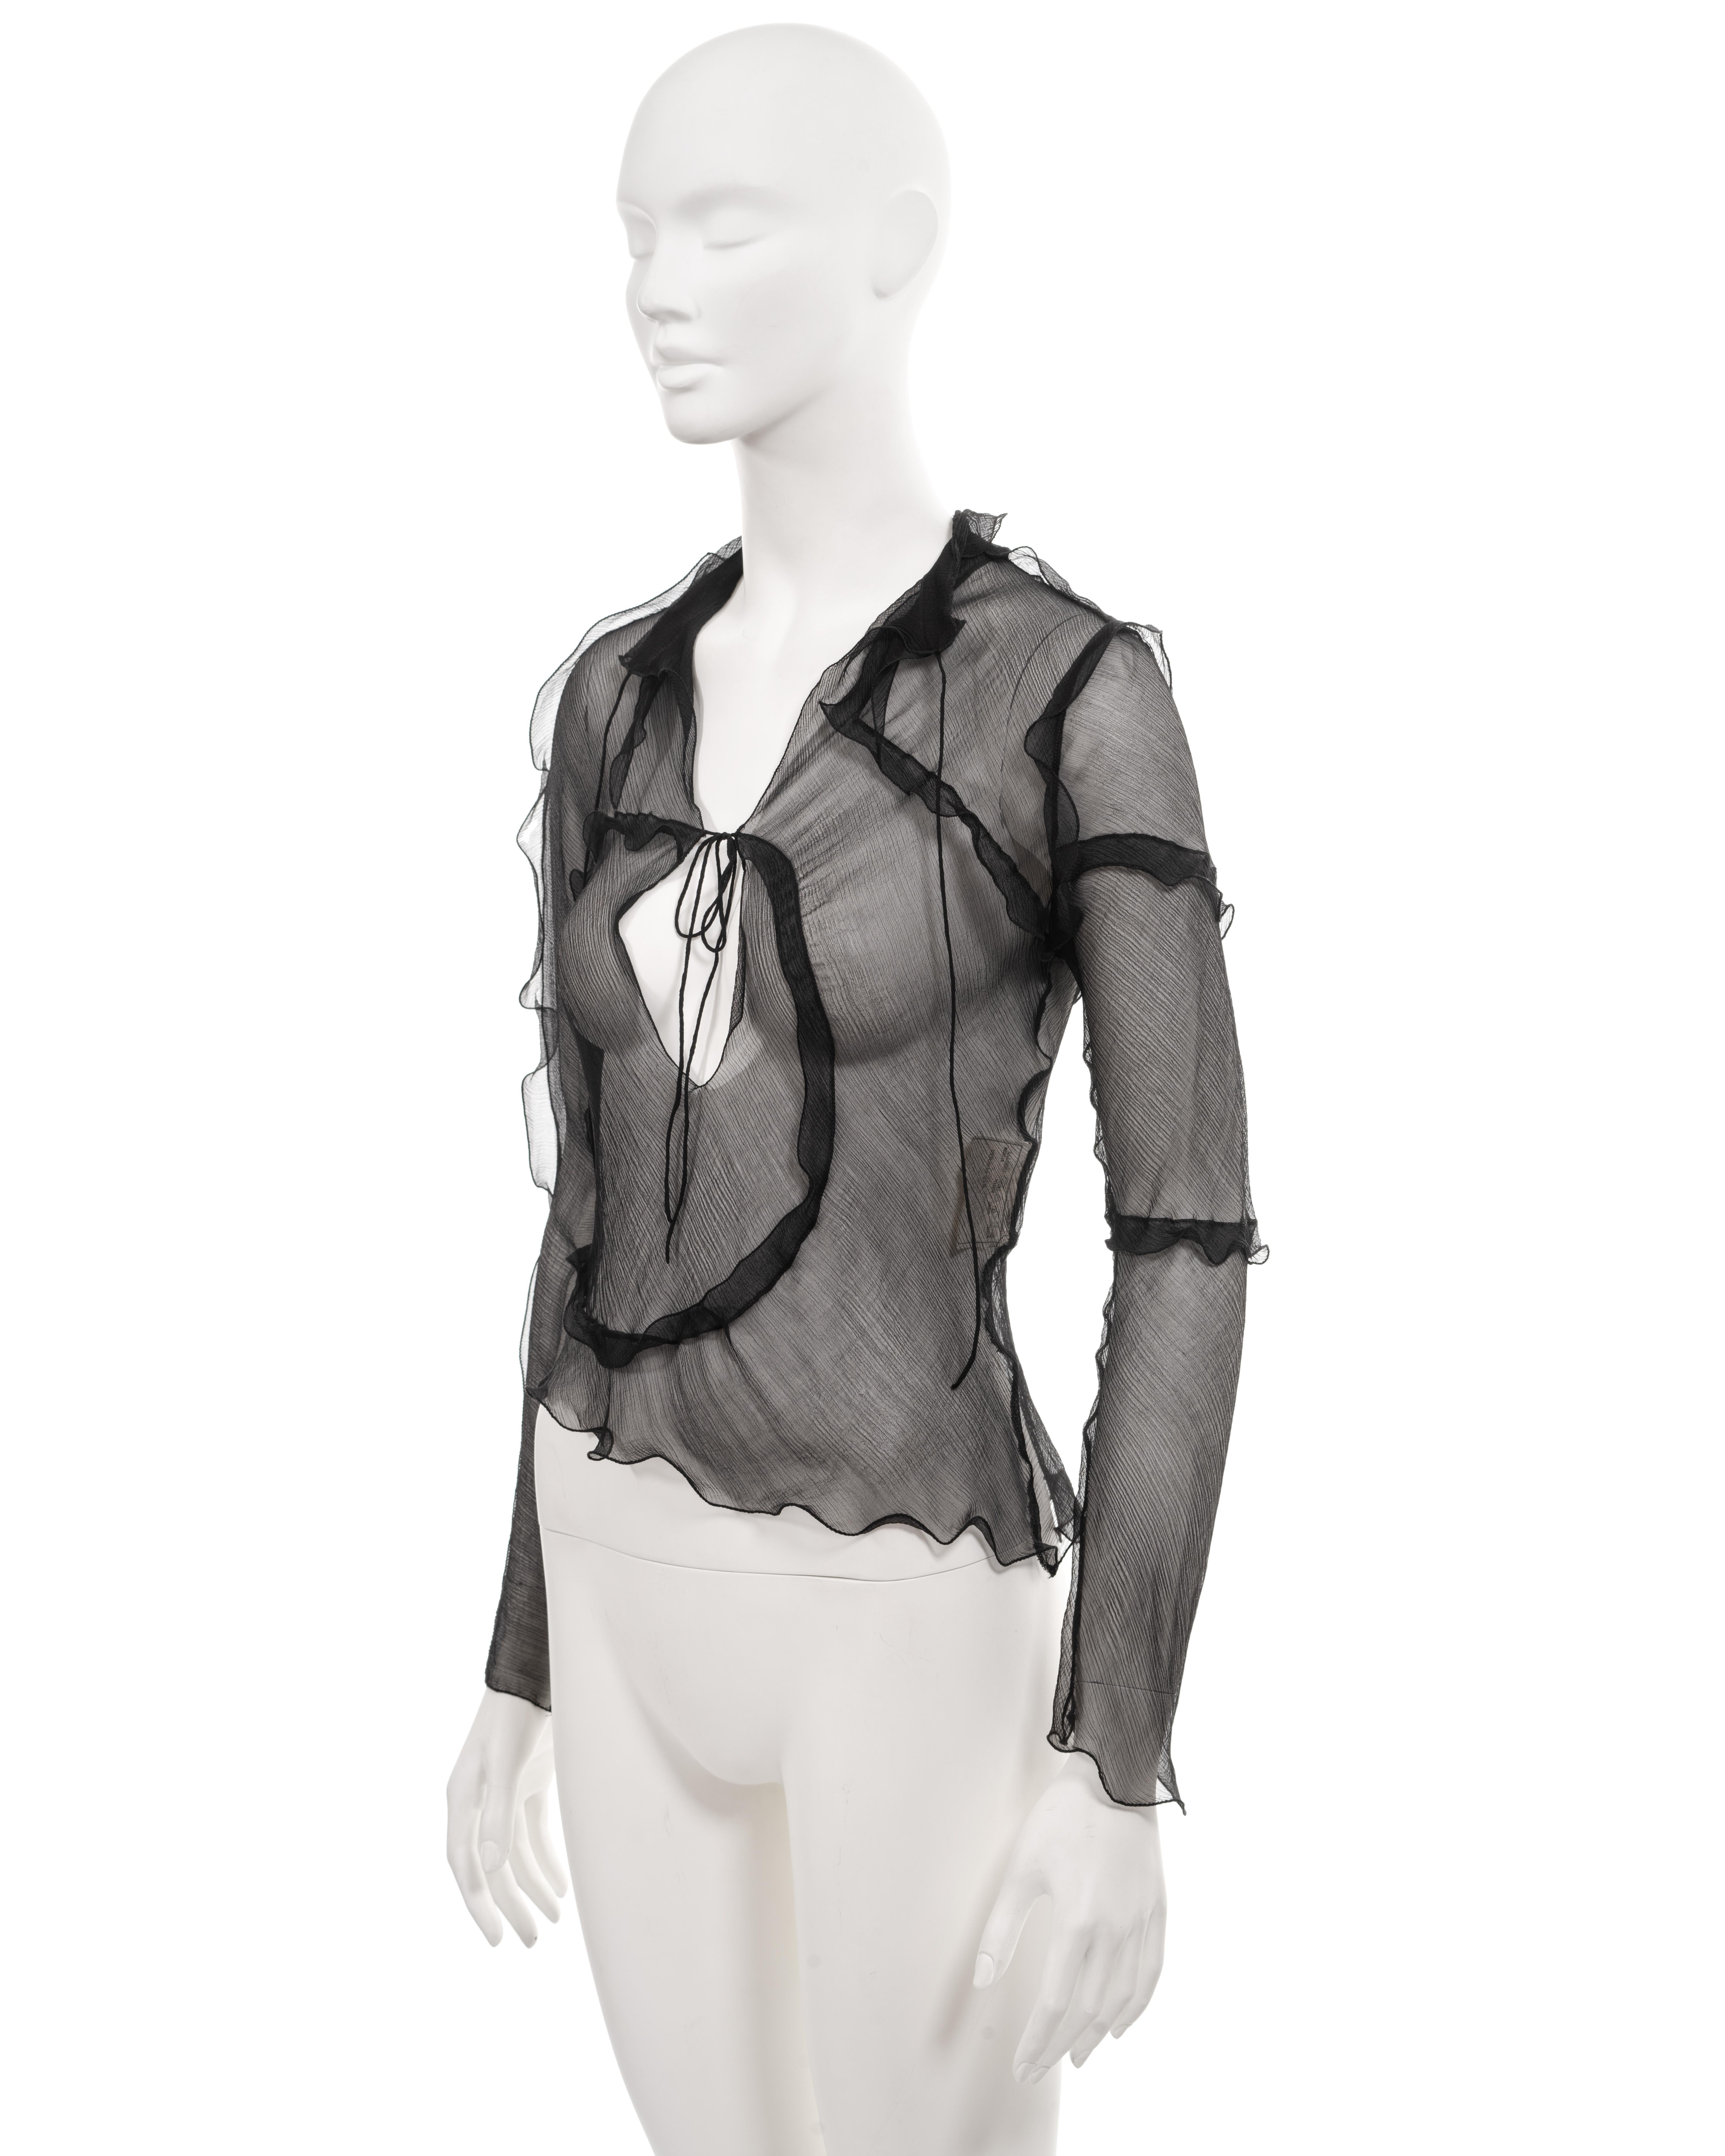 Fendi by Karl Lagerfeld black silk chiffon blouse, ss 2000 1